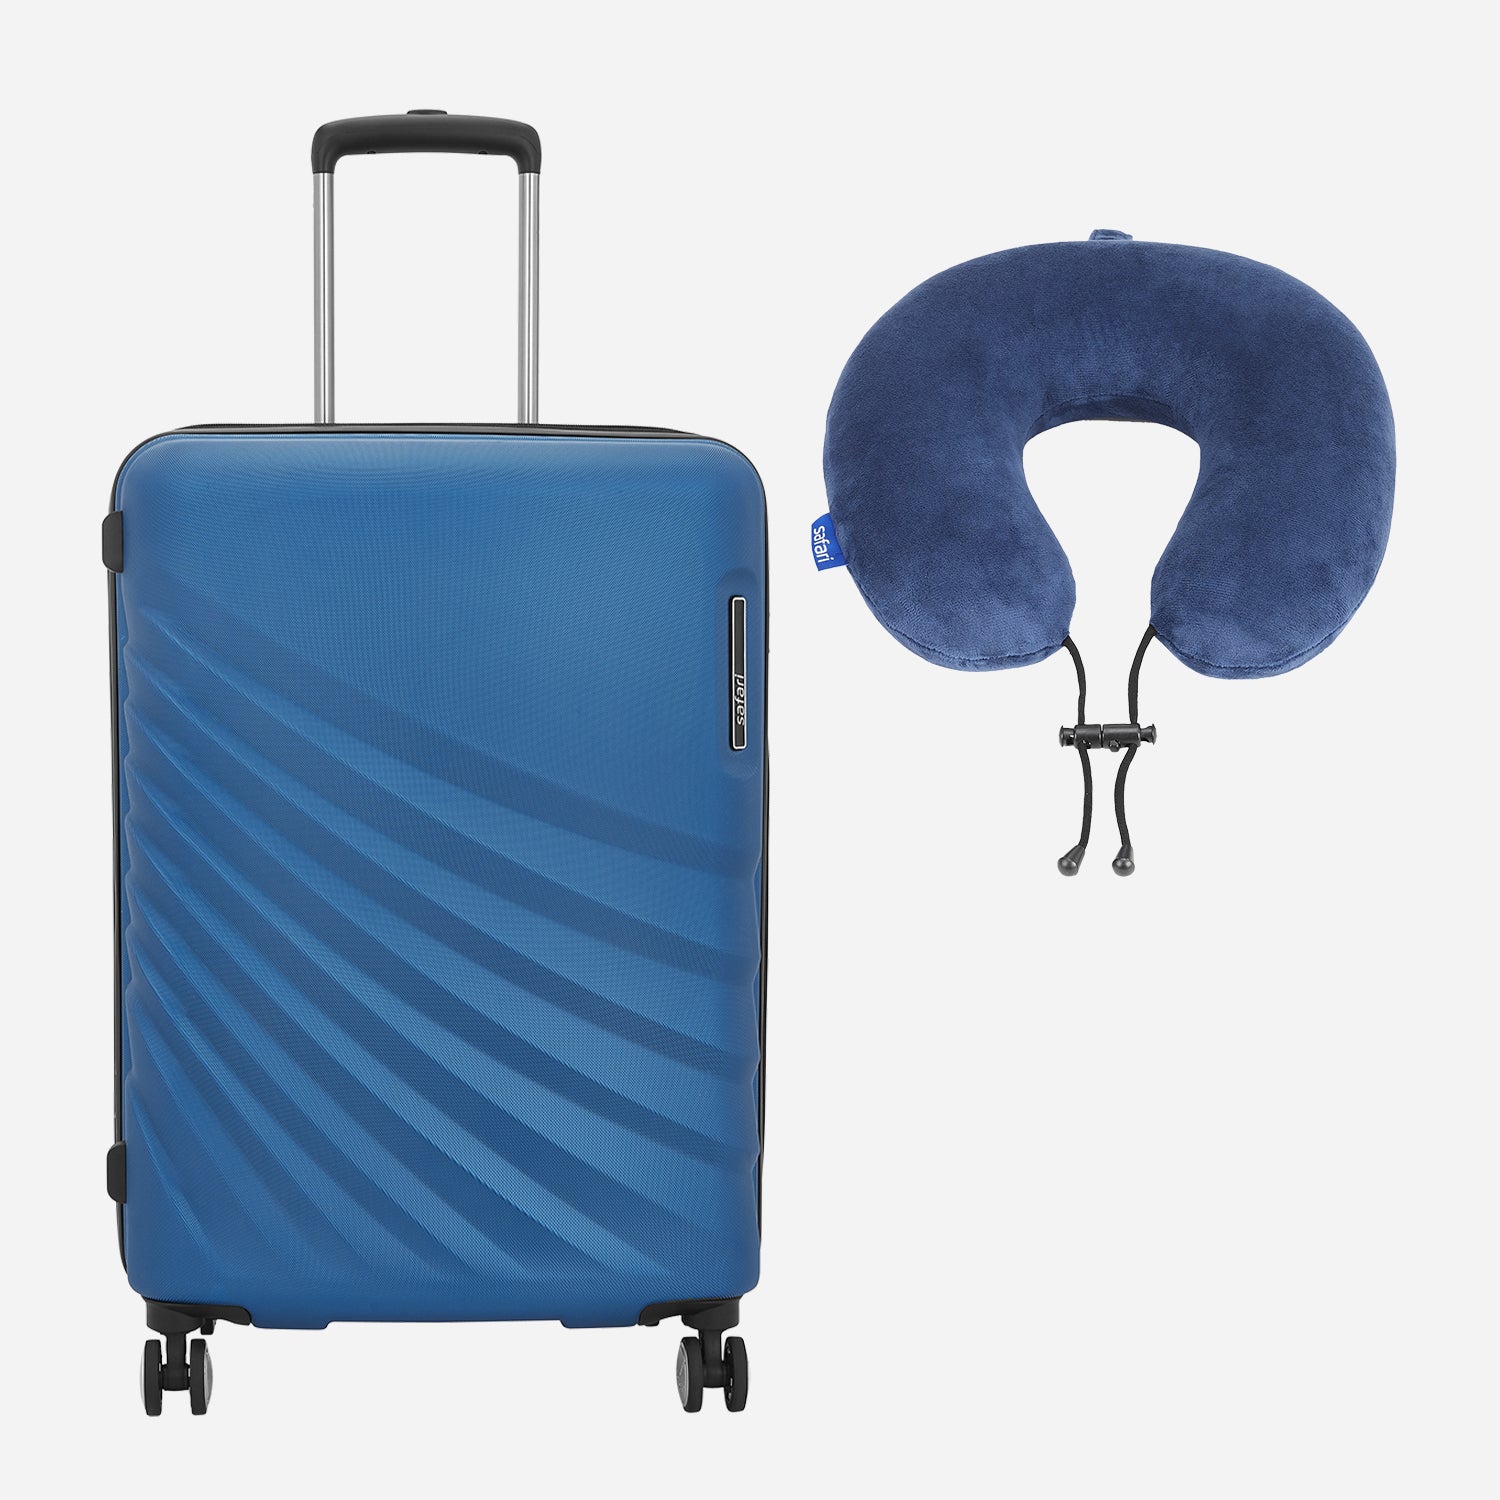 Polaris Hard Luggage Cabin size and Basic Neck Pillow - Blue